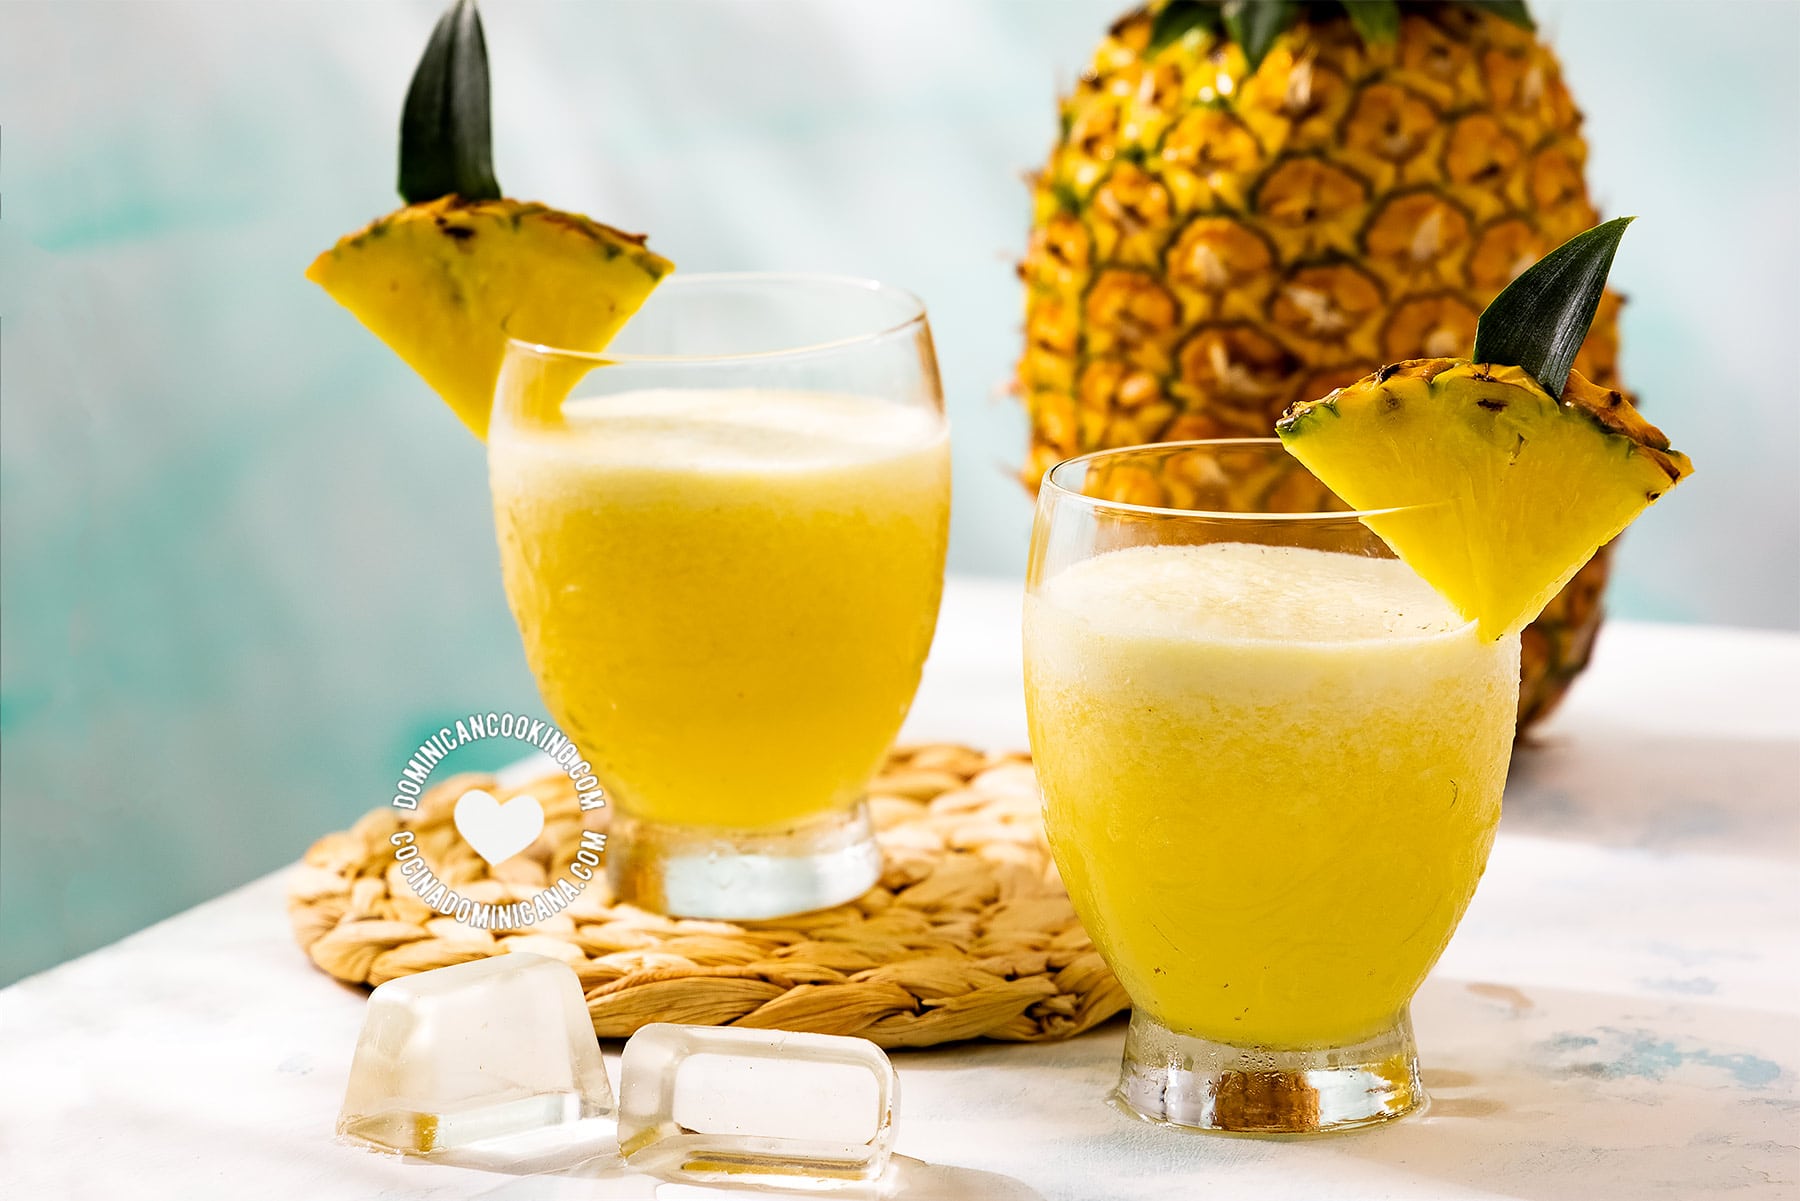 Pera-piña (rice and pineapple juice).